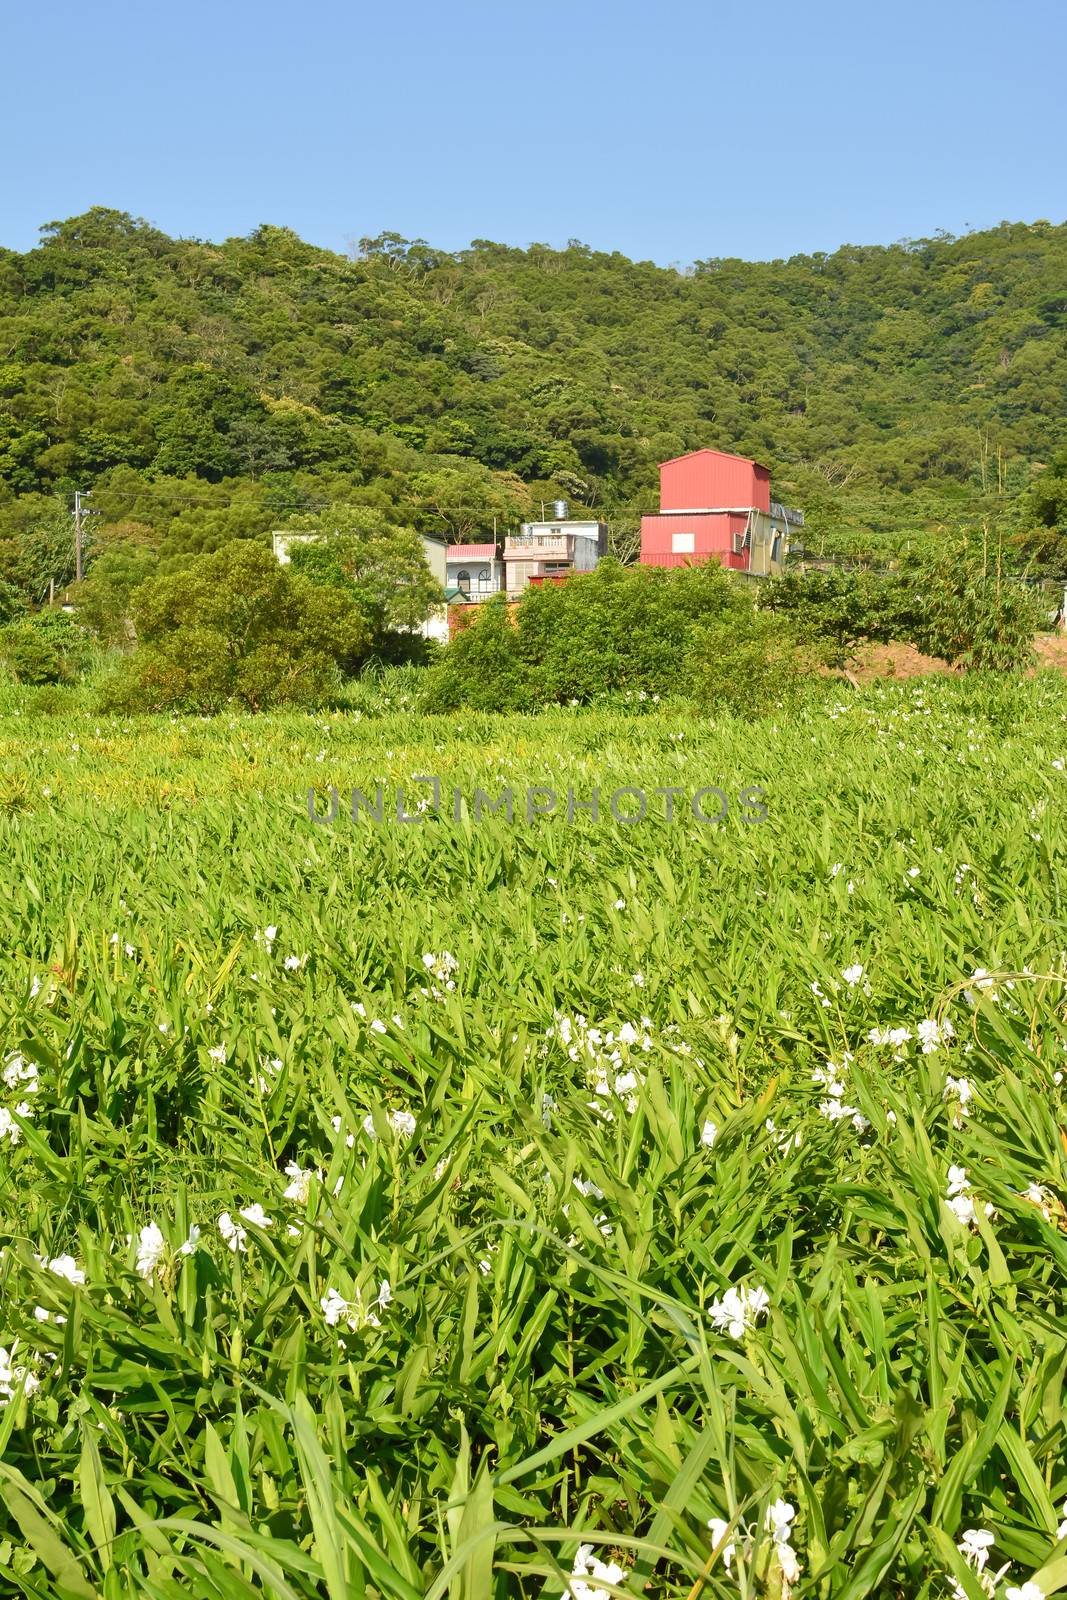 Ginger lily farm, photo shot at Manzhou Township, Pingtung County.